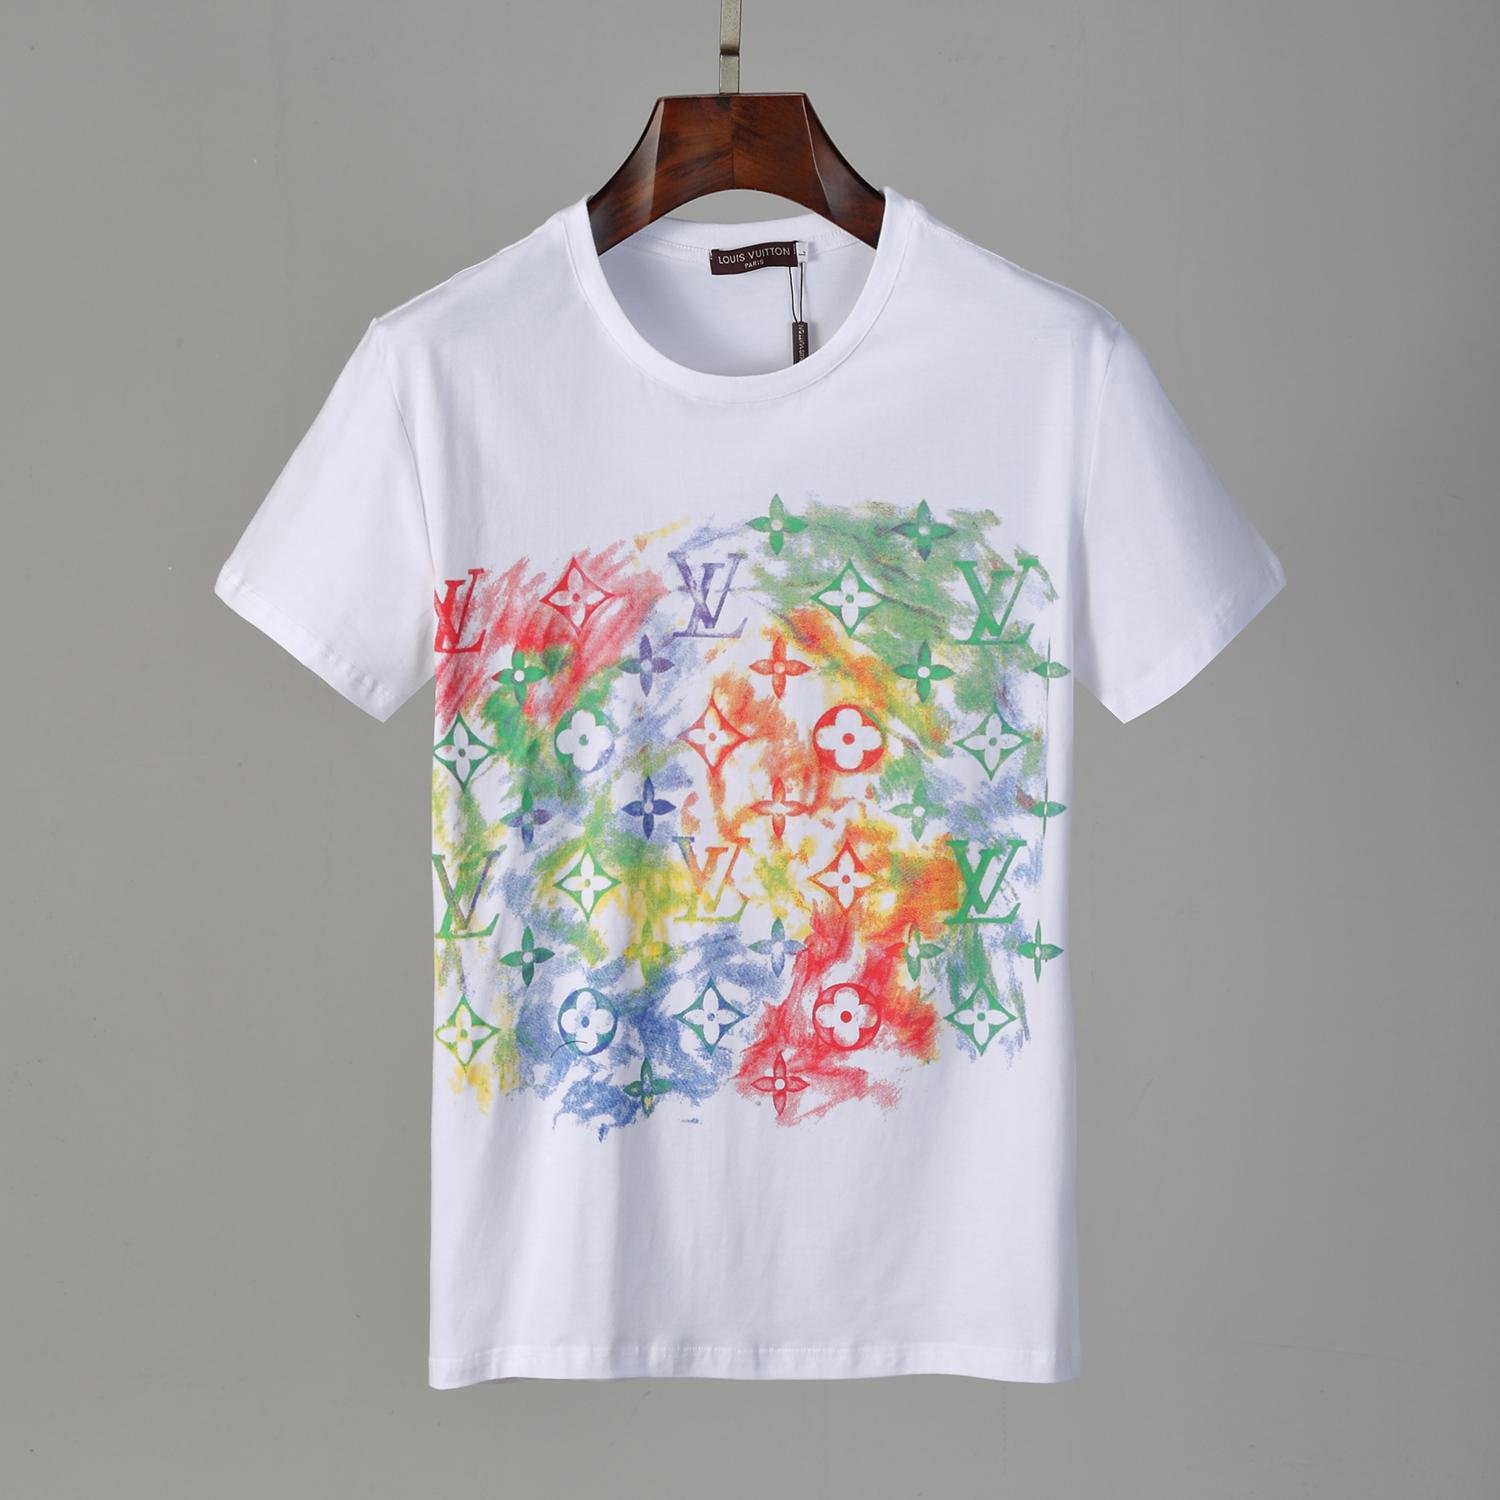 printed oversize     -shirt,     rand T-shirt,hot sale     -shirt   